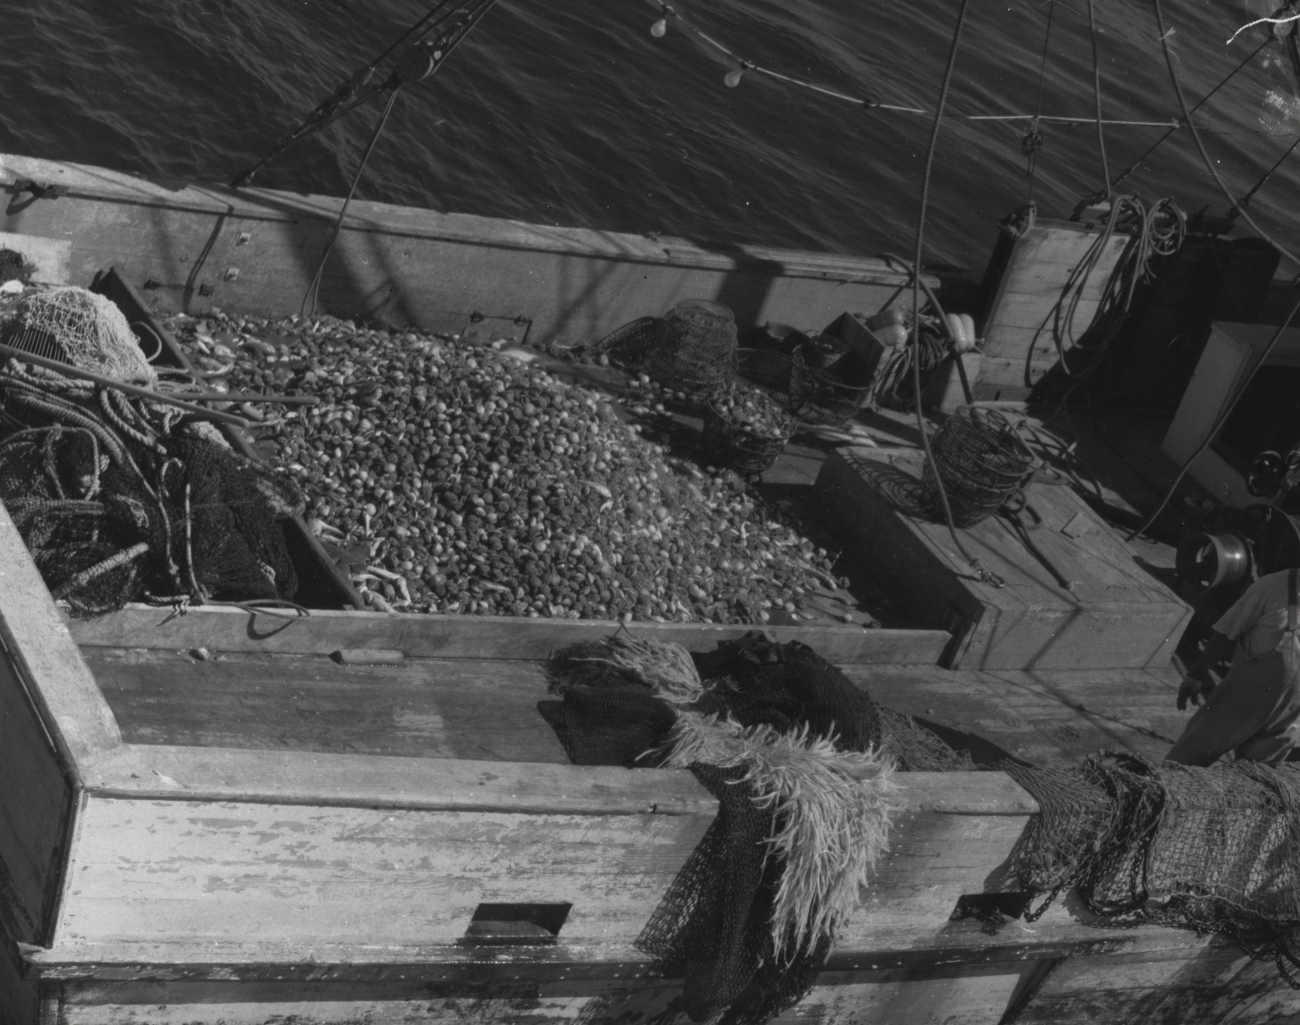 A 20-bushel catch of calico scallops on the deck of a North Carolinascallop boat